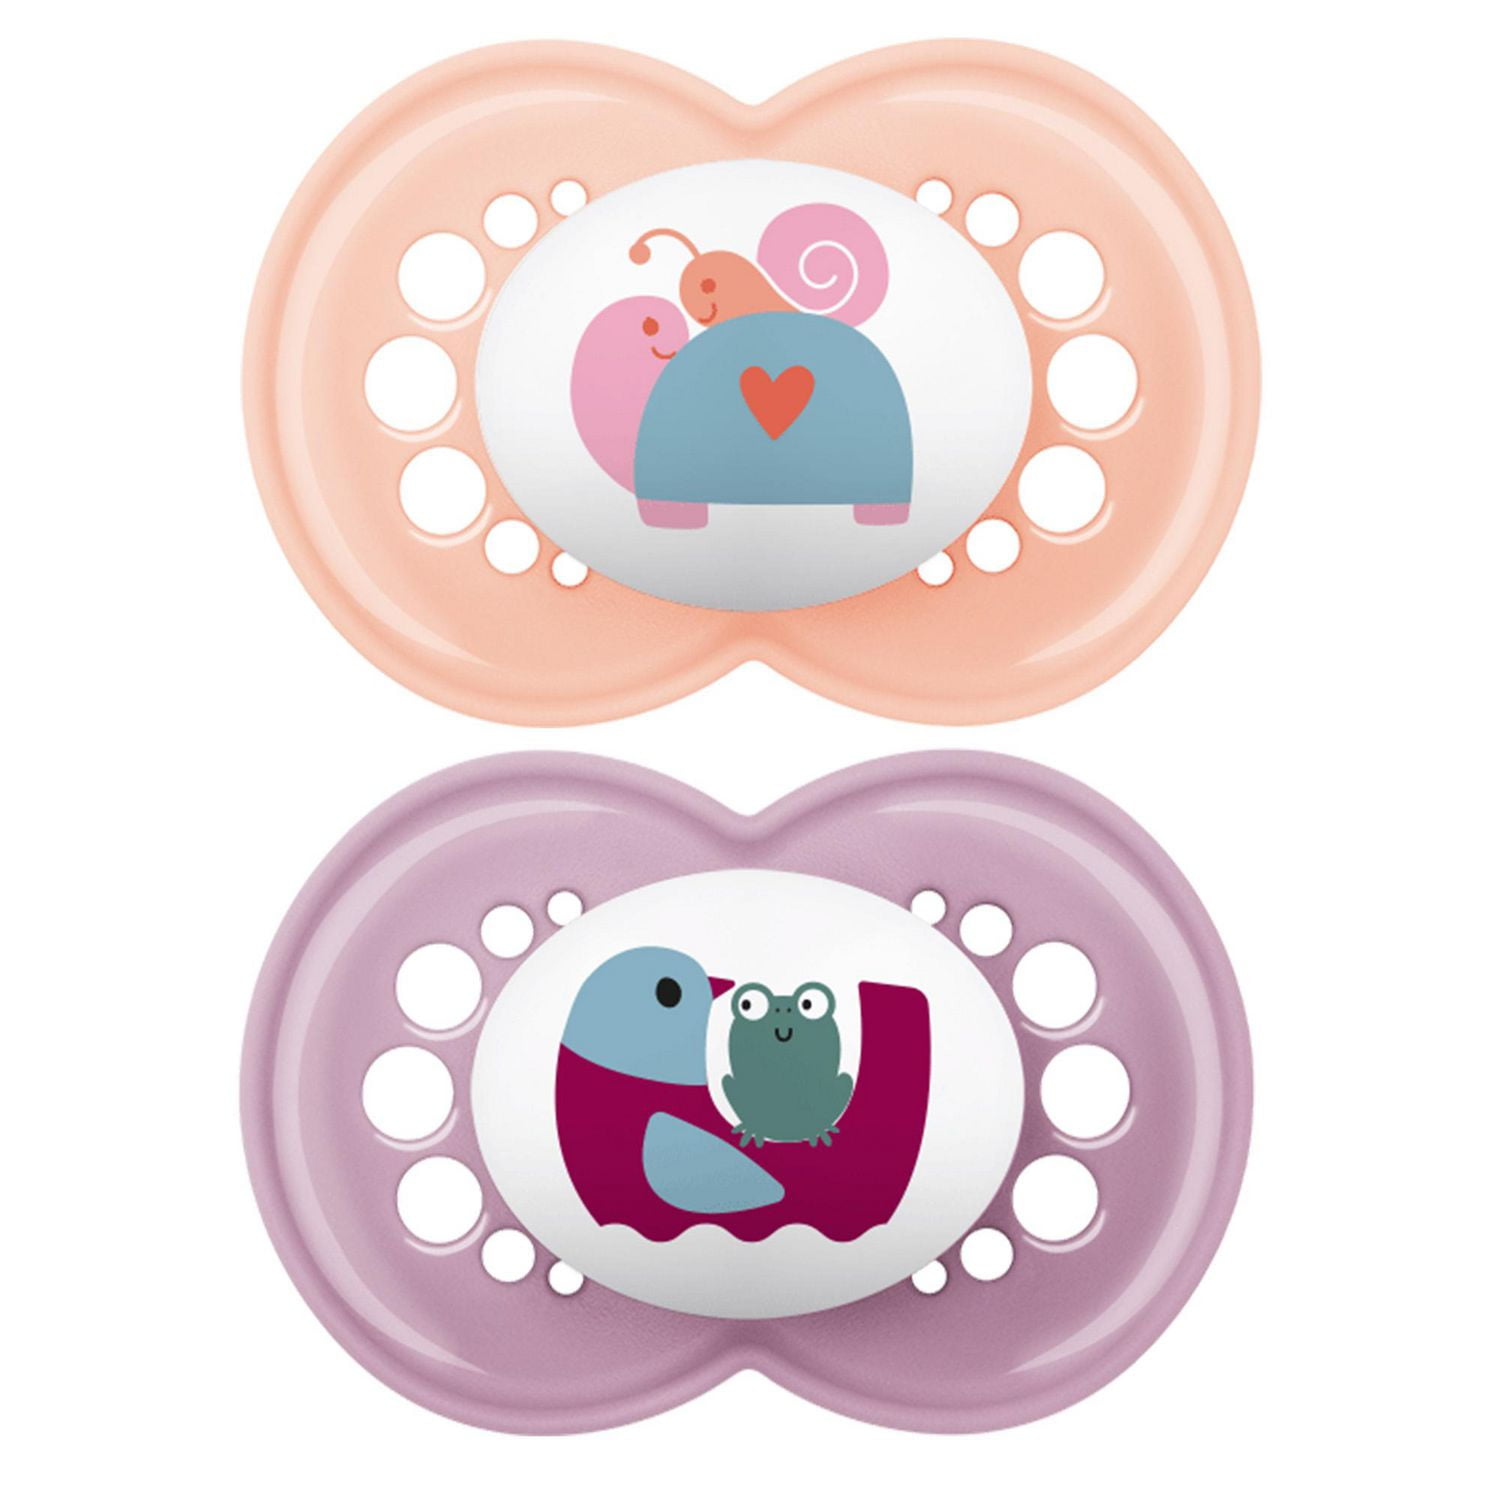  MAM Original Matte Baby Pacifier, Nipple Shape Helps Promote  Healthy Oral Development, Sterilizer Case, Girl, 0-6